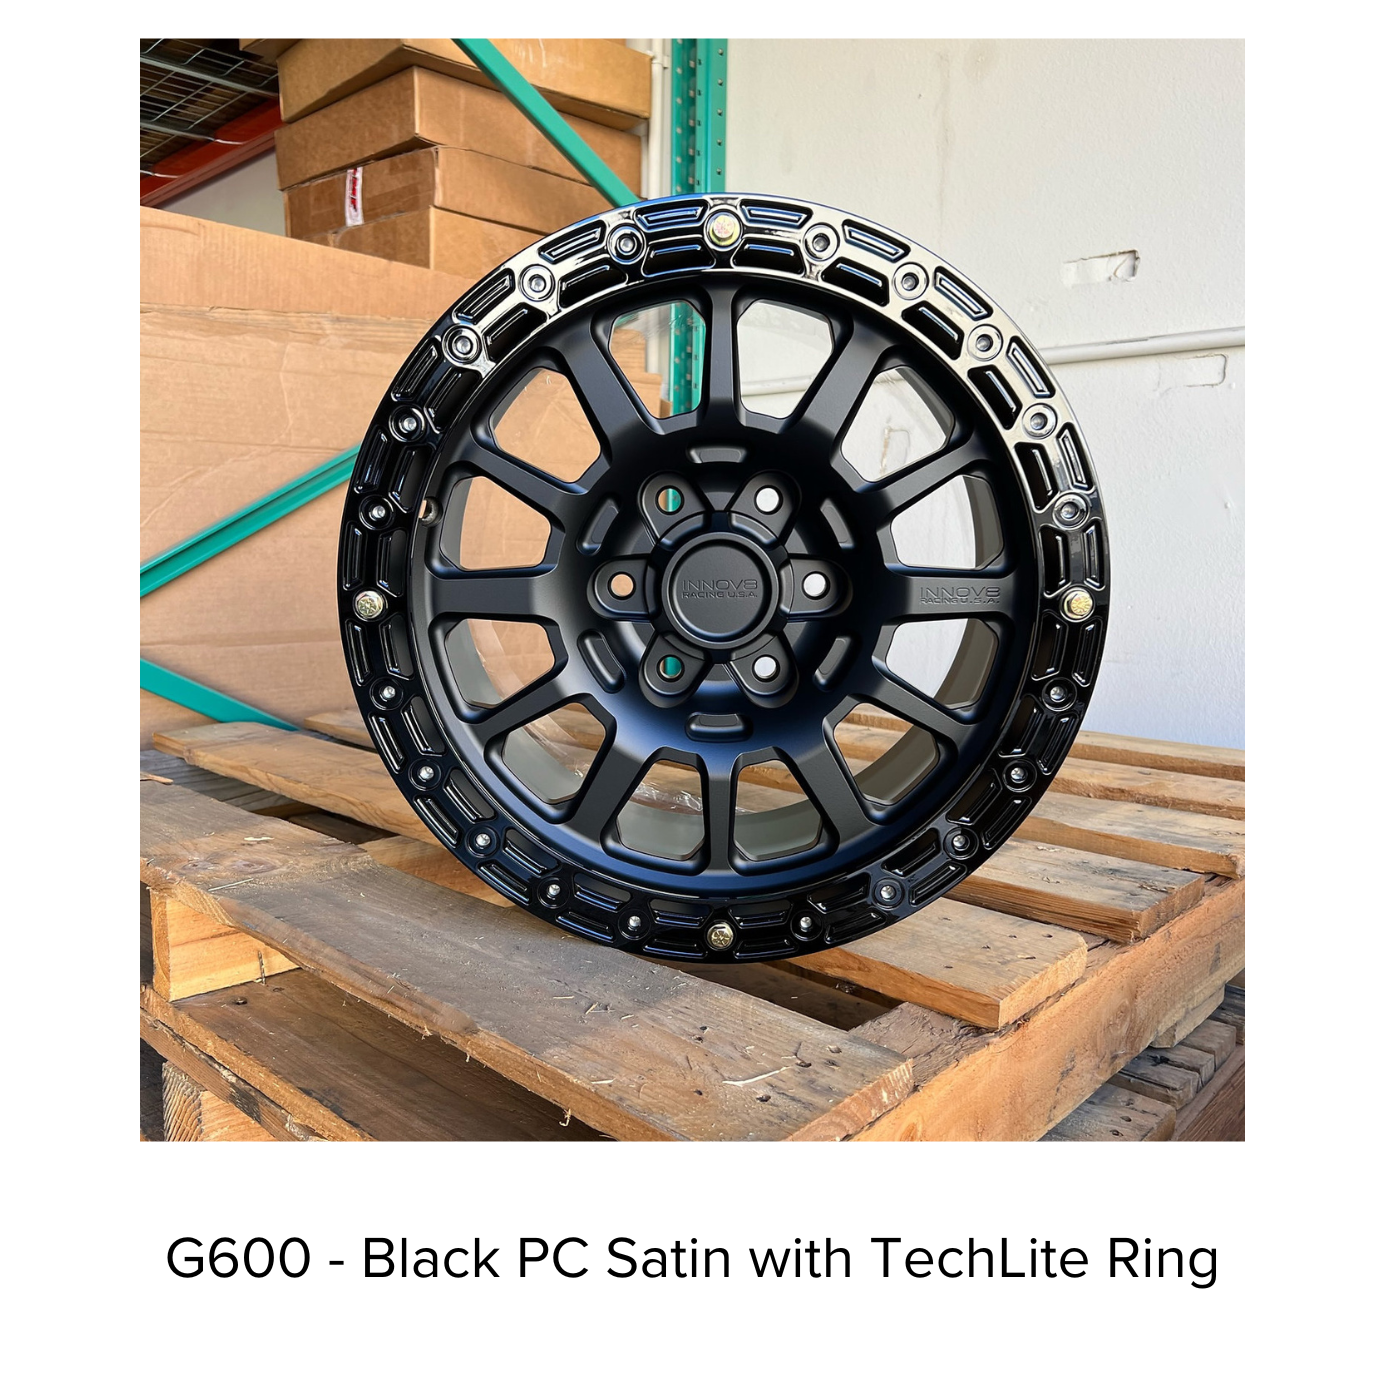 G600 Simulated Beadlock Wheel 17x8.5" 5 & 6 Lug - TechLite Ring